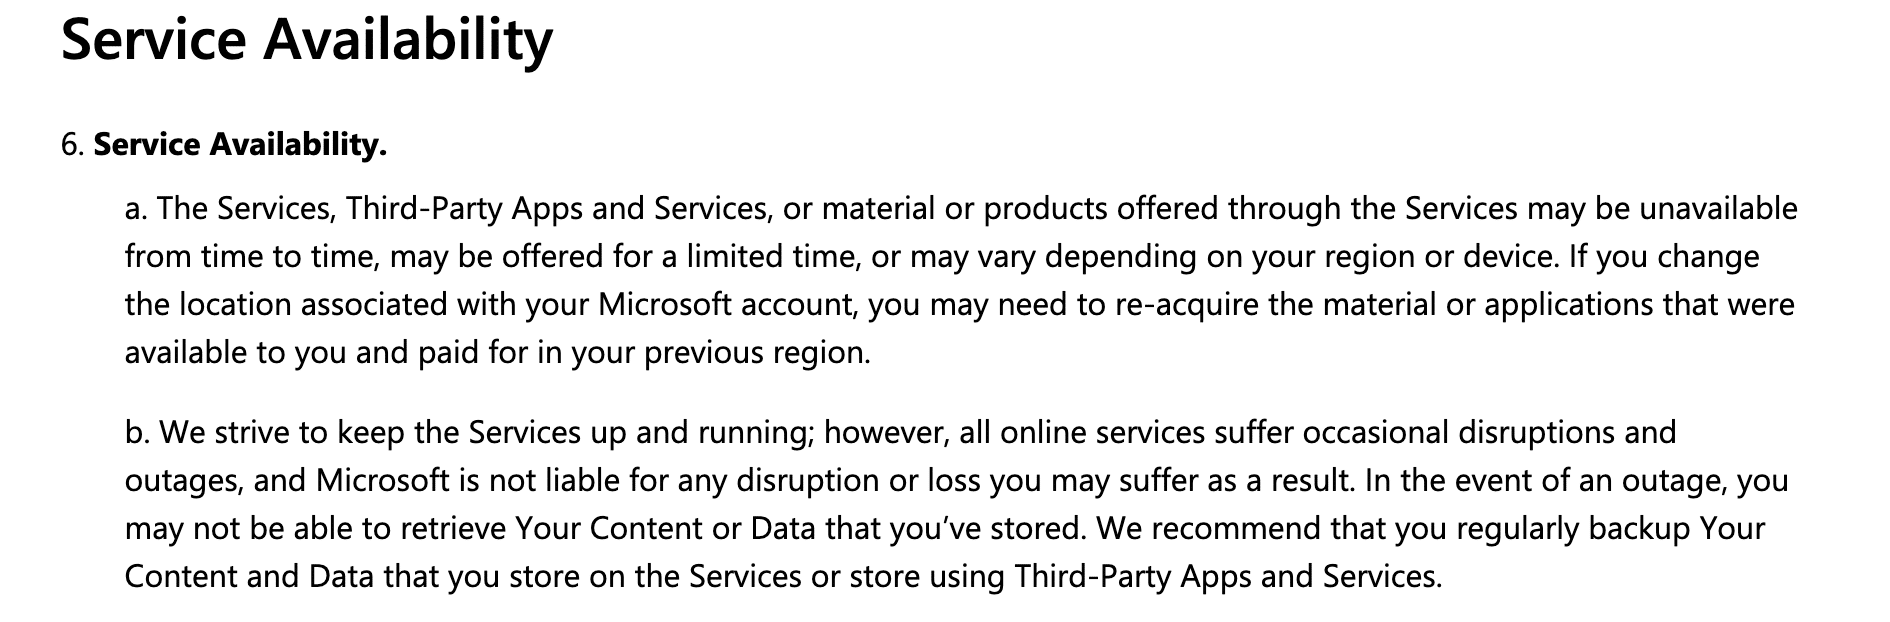 Microsoft service availability